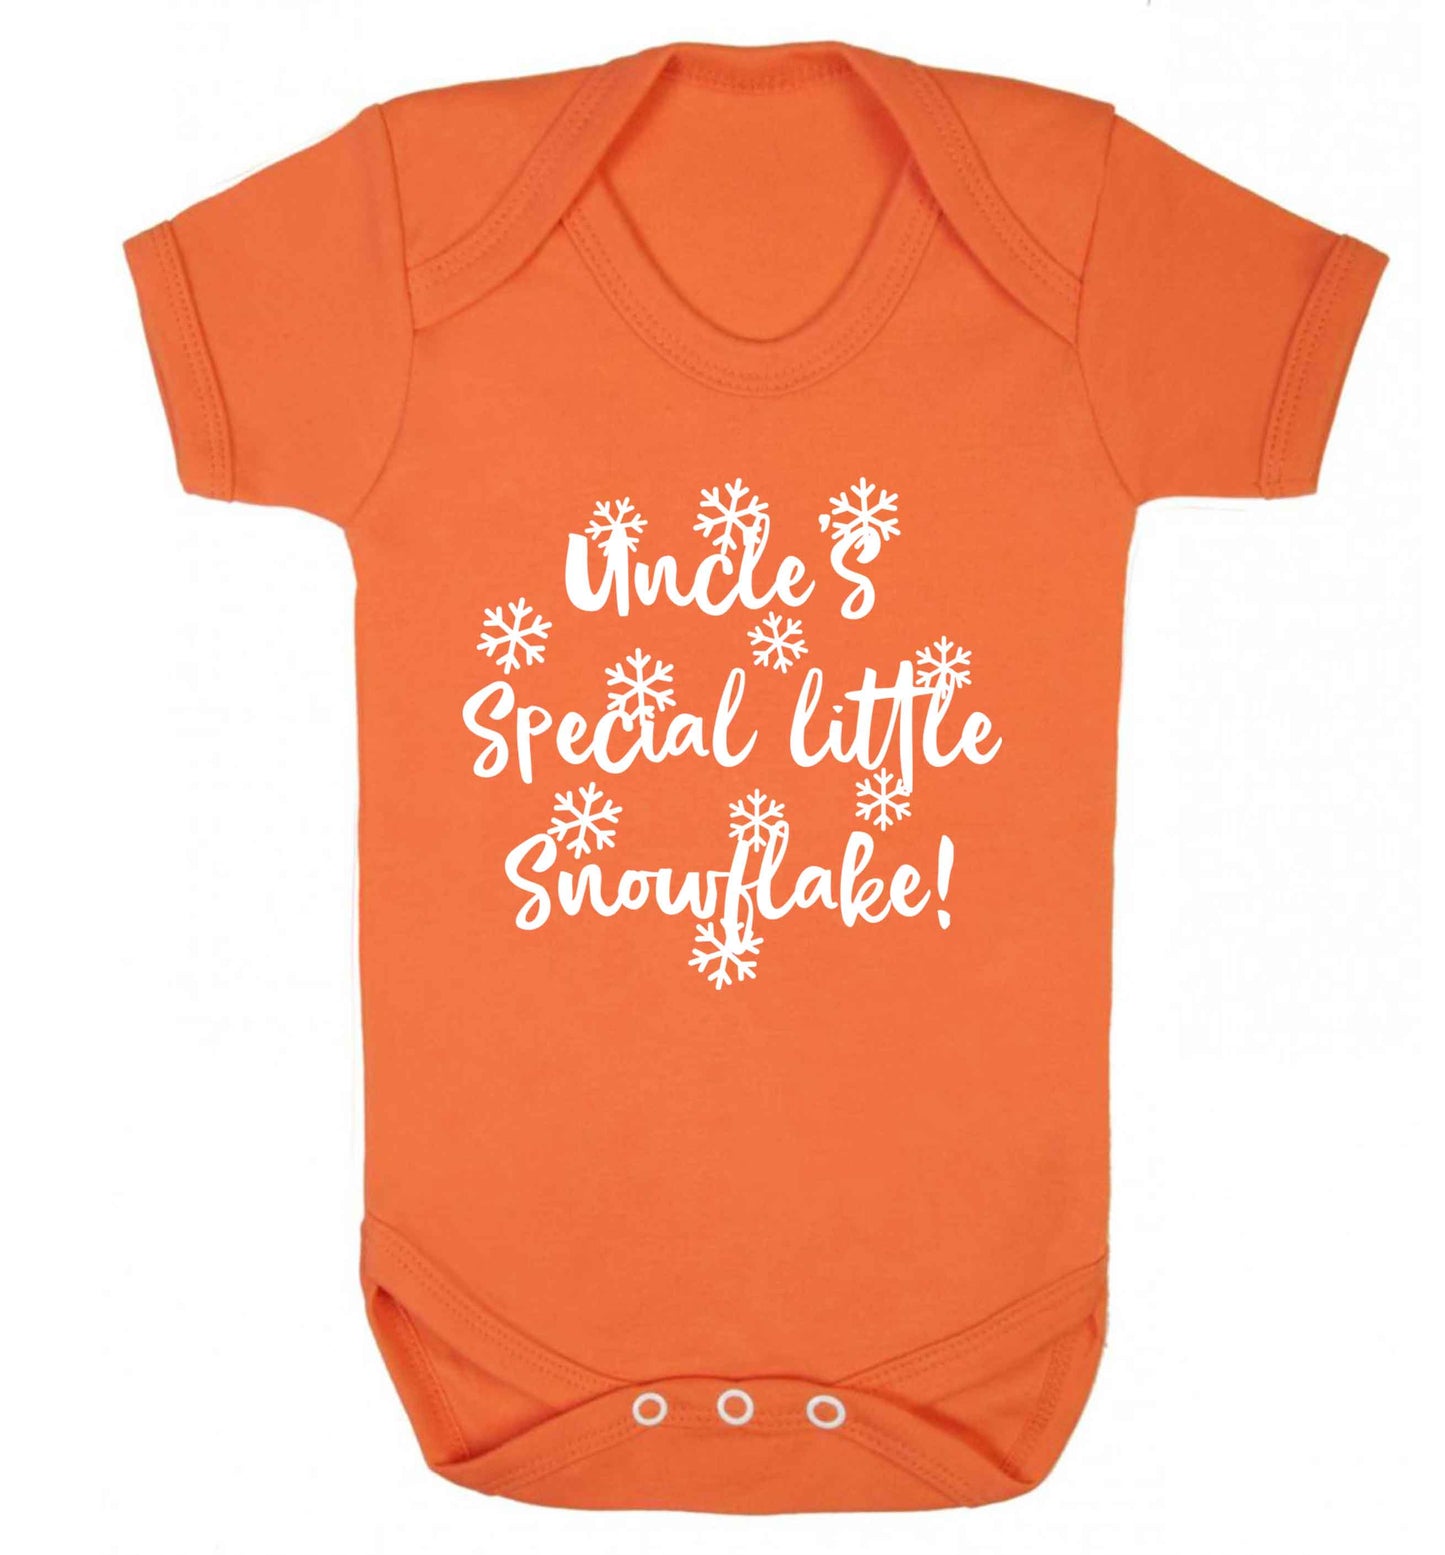 Uncle's special little snowflake Baby Vest orange 18-24 months